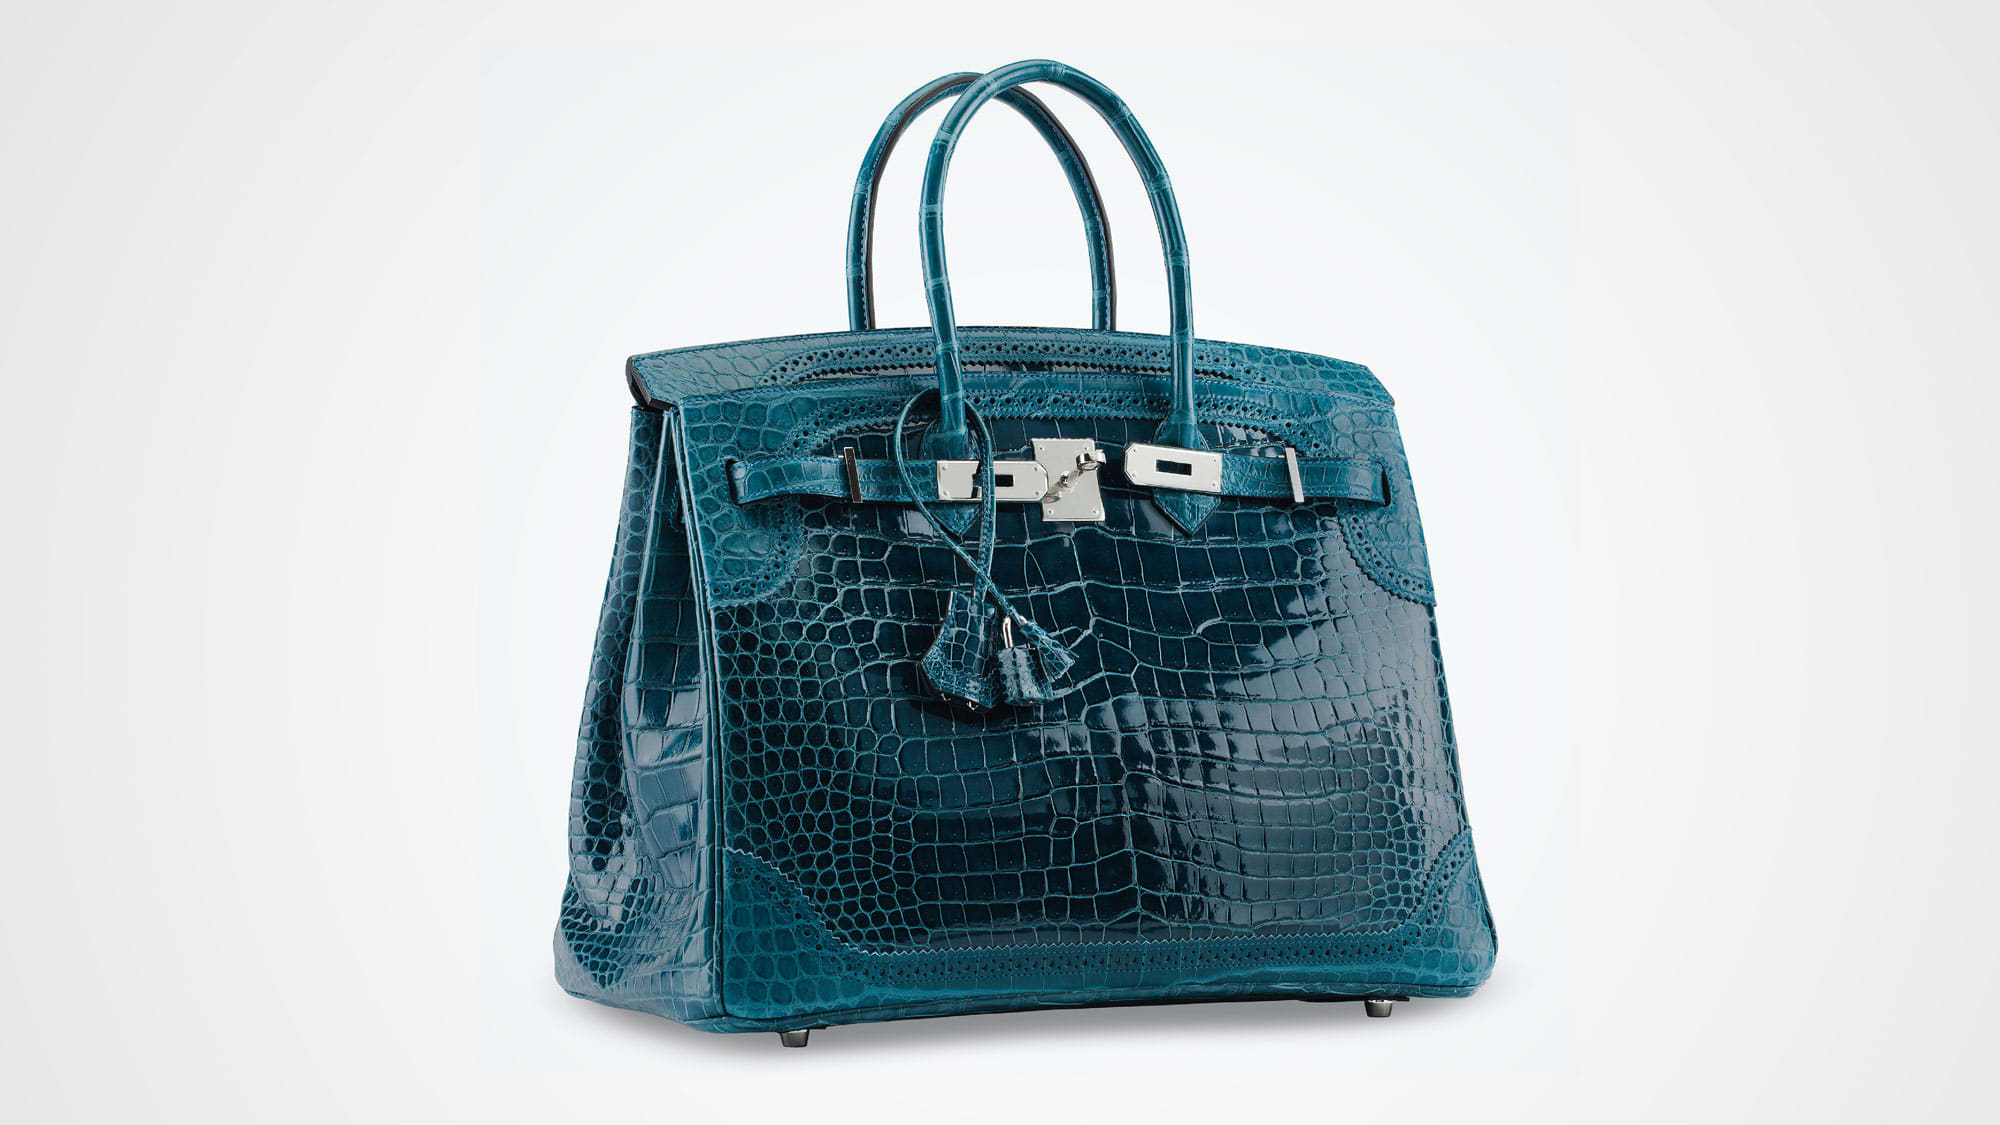 Hermès Birkin handbag expected to sell 